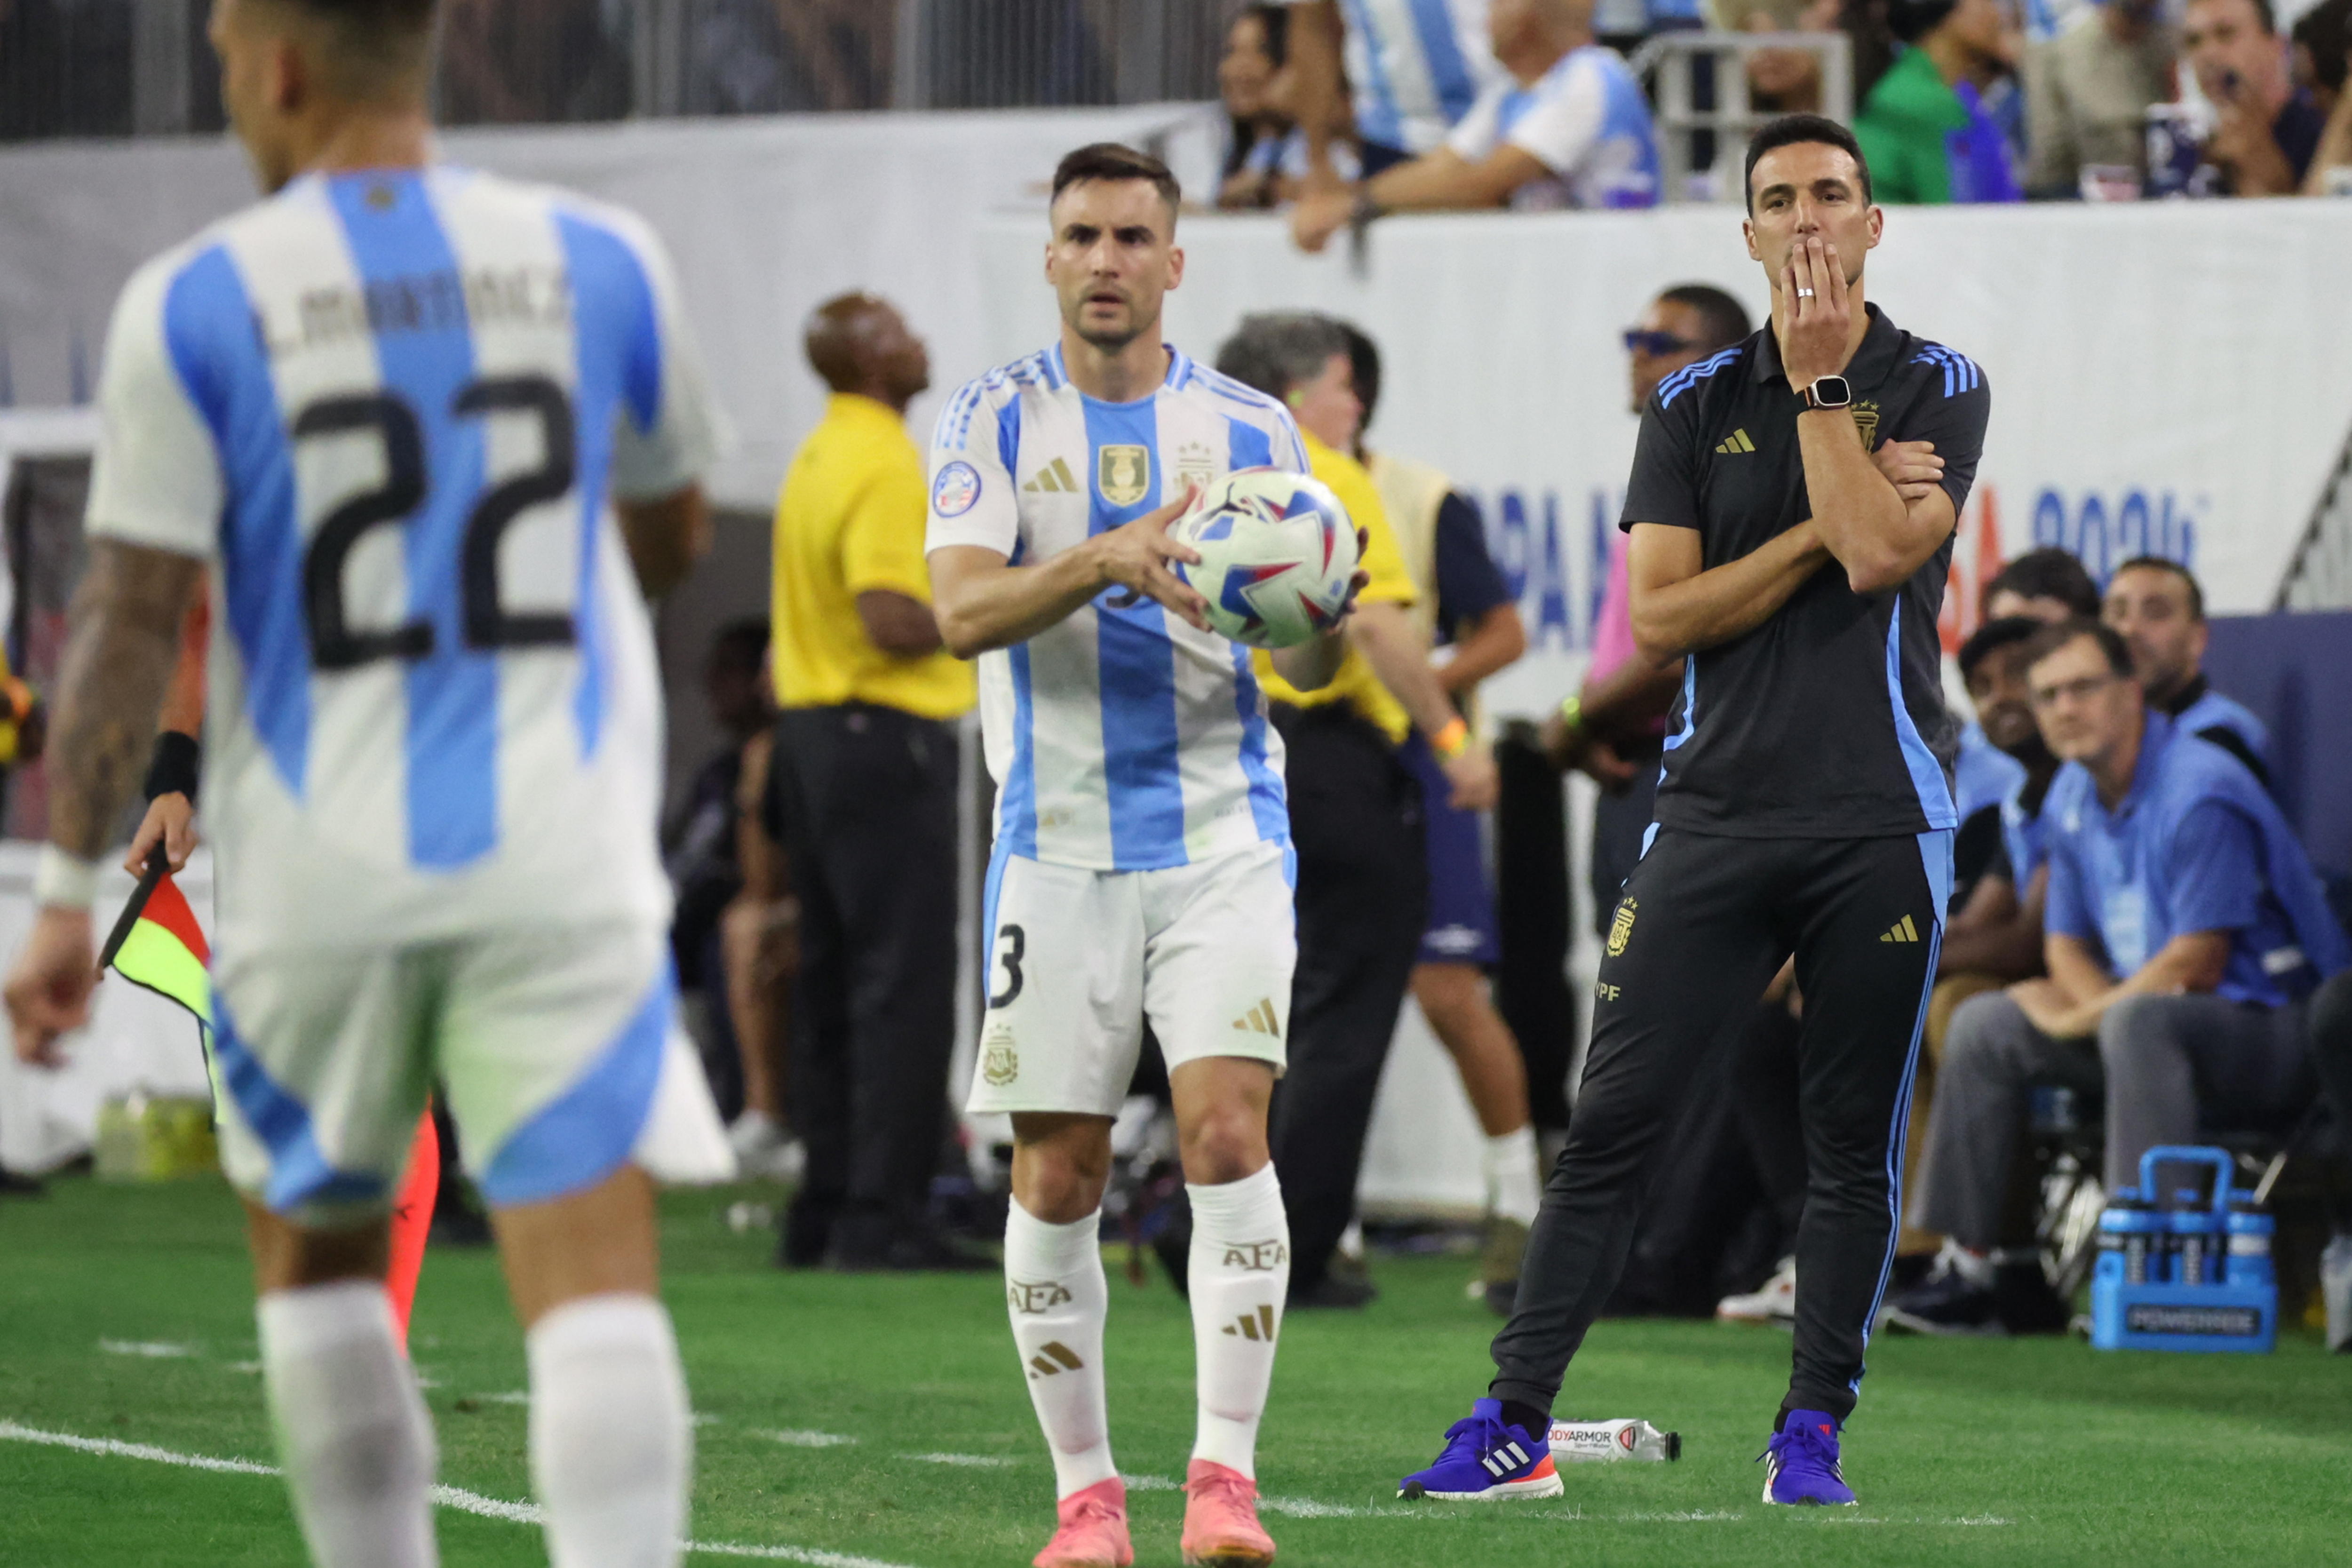 Argentina elimina a Ecuador y pasa a semis gracias al 'Dibu' Martínez